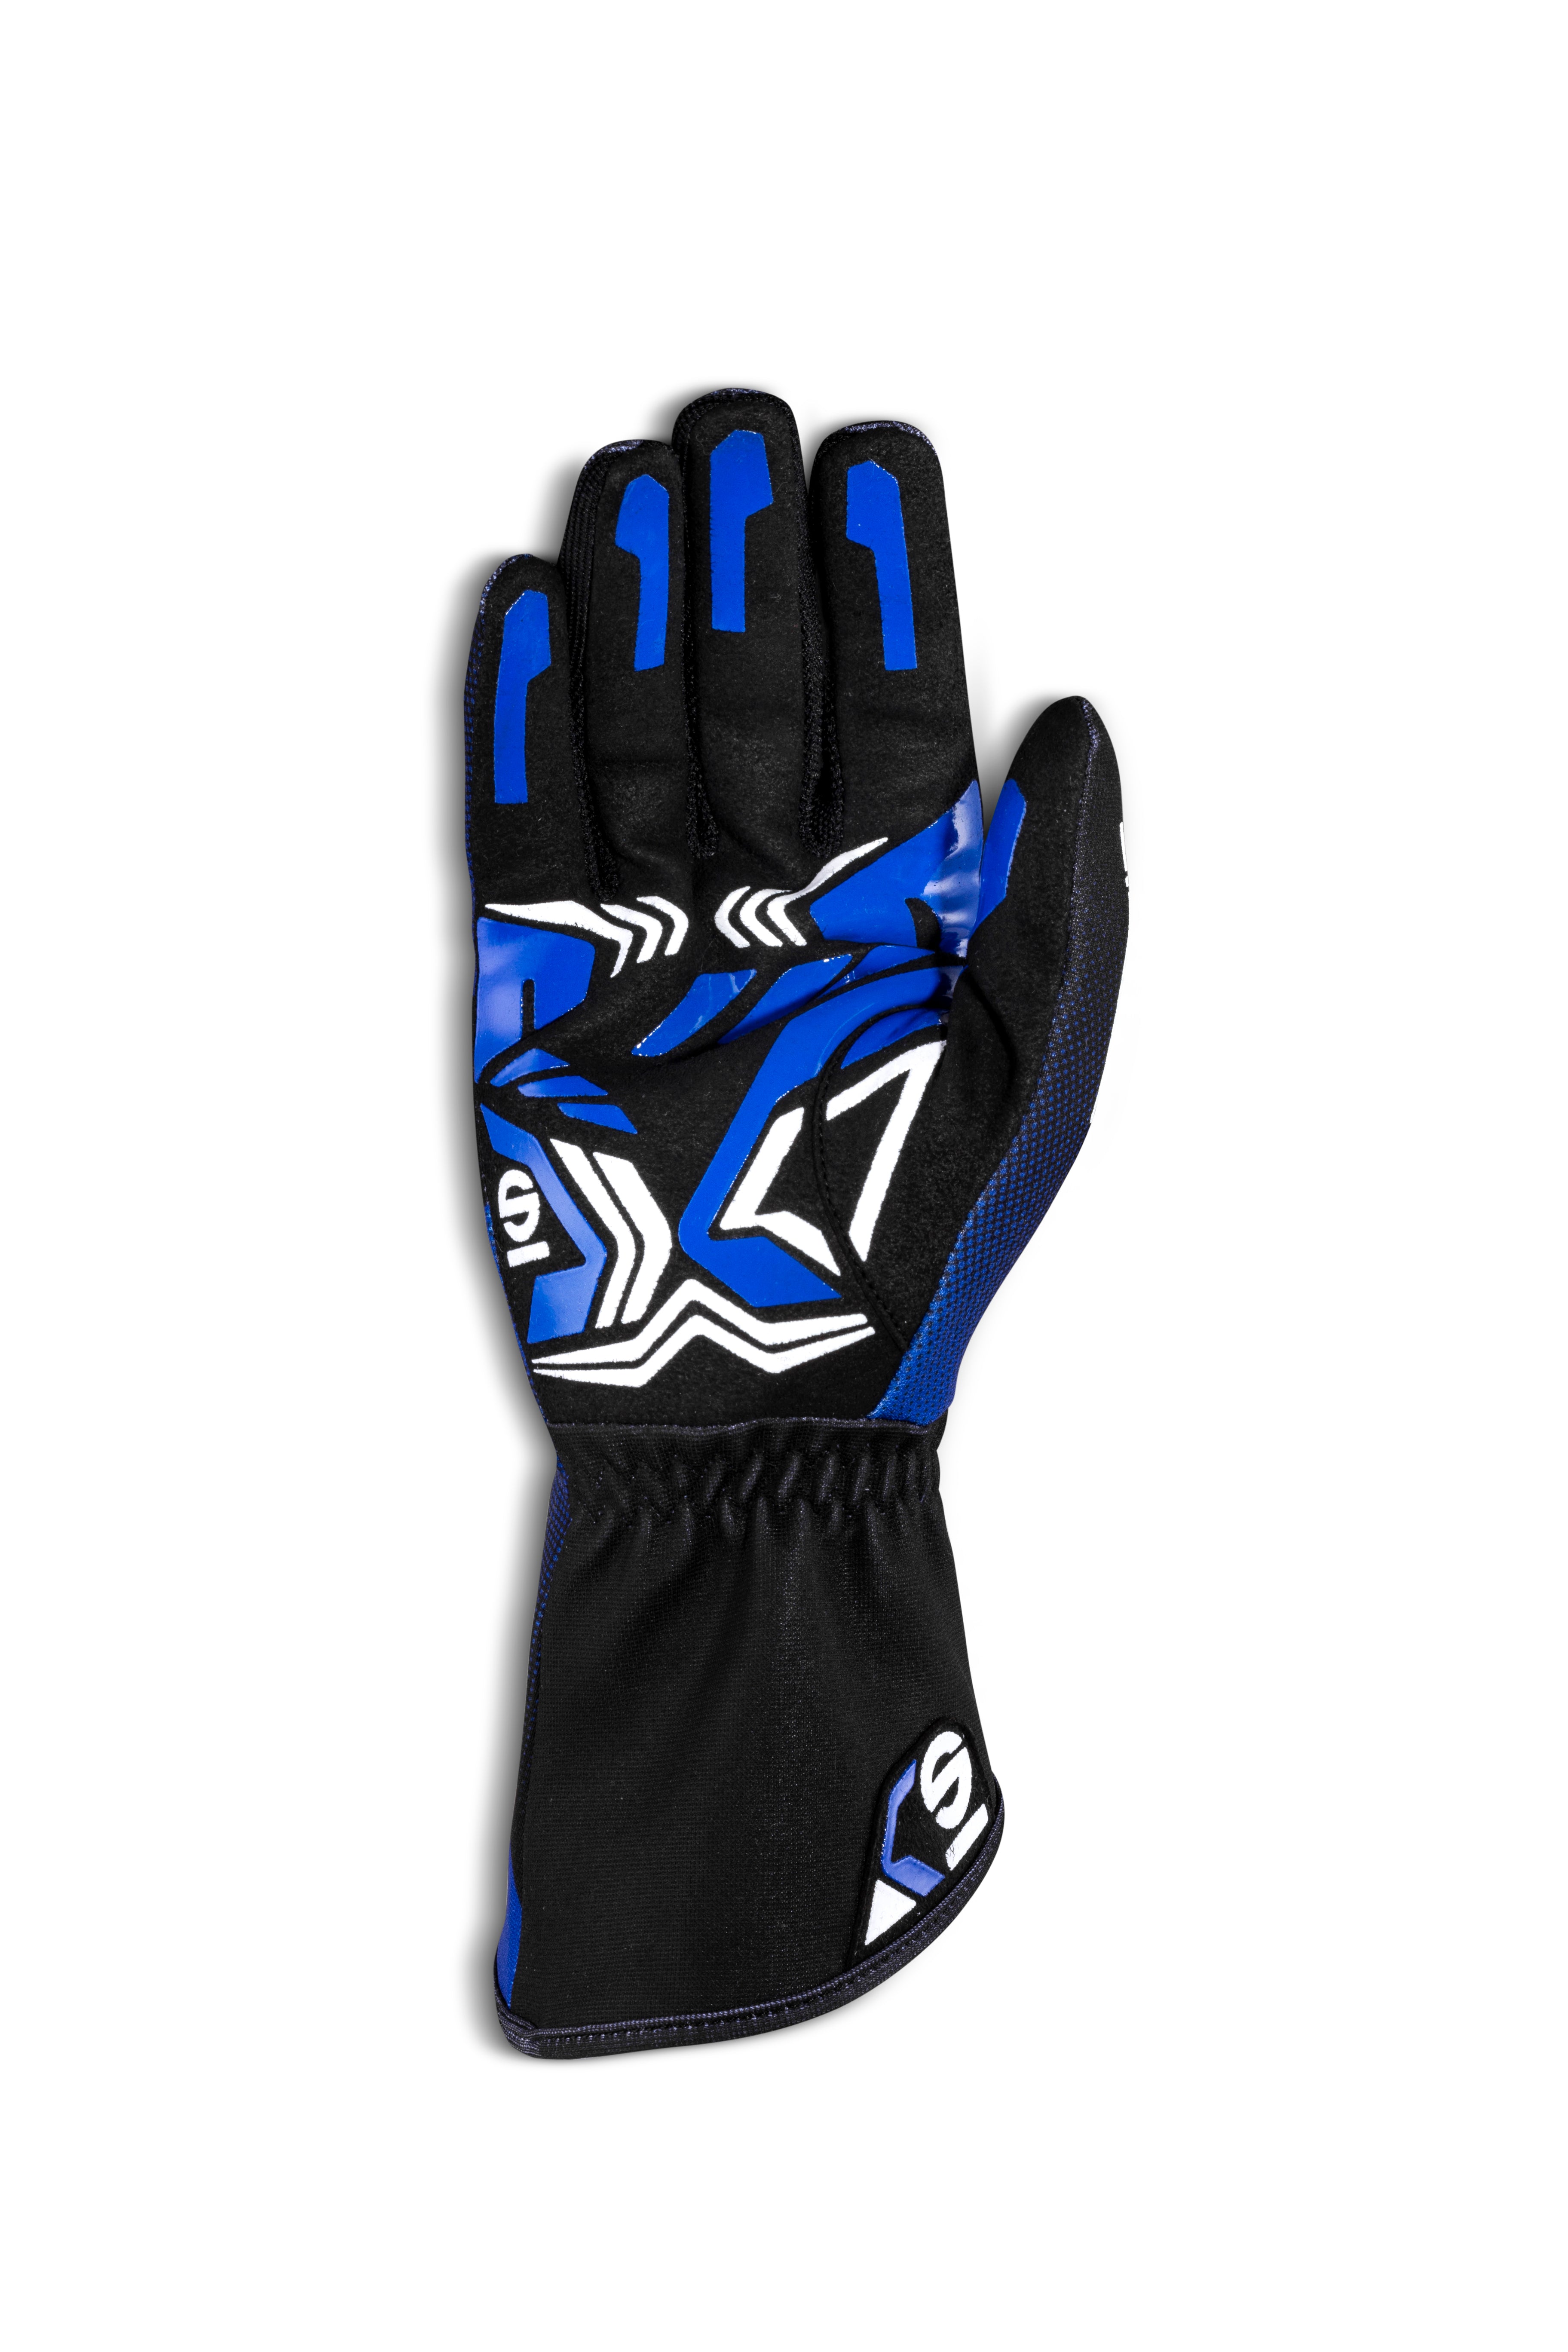 SPARCO 00255610BXNR Kart gloves RUSH, blue/black, size 10 Photo-1 